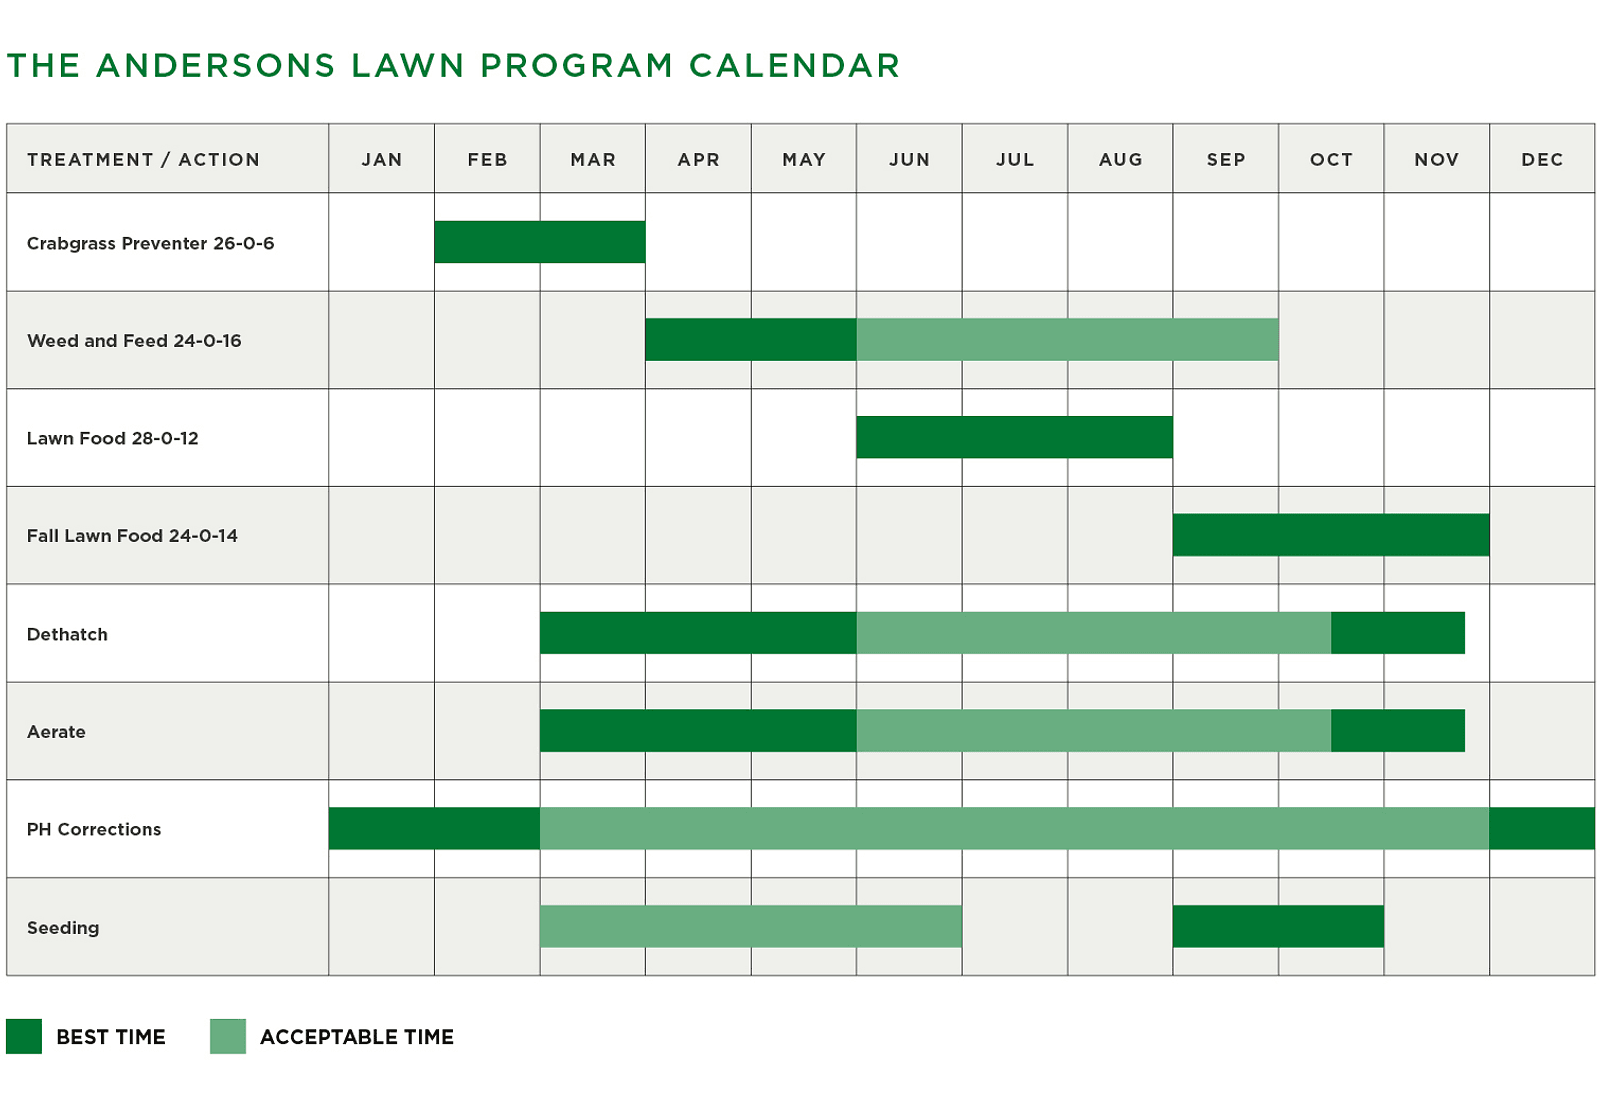 The Andersons Lawn Program Application Calendar